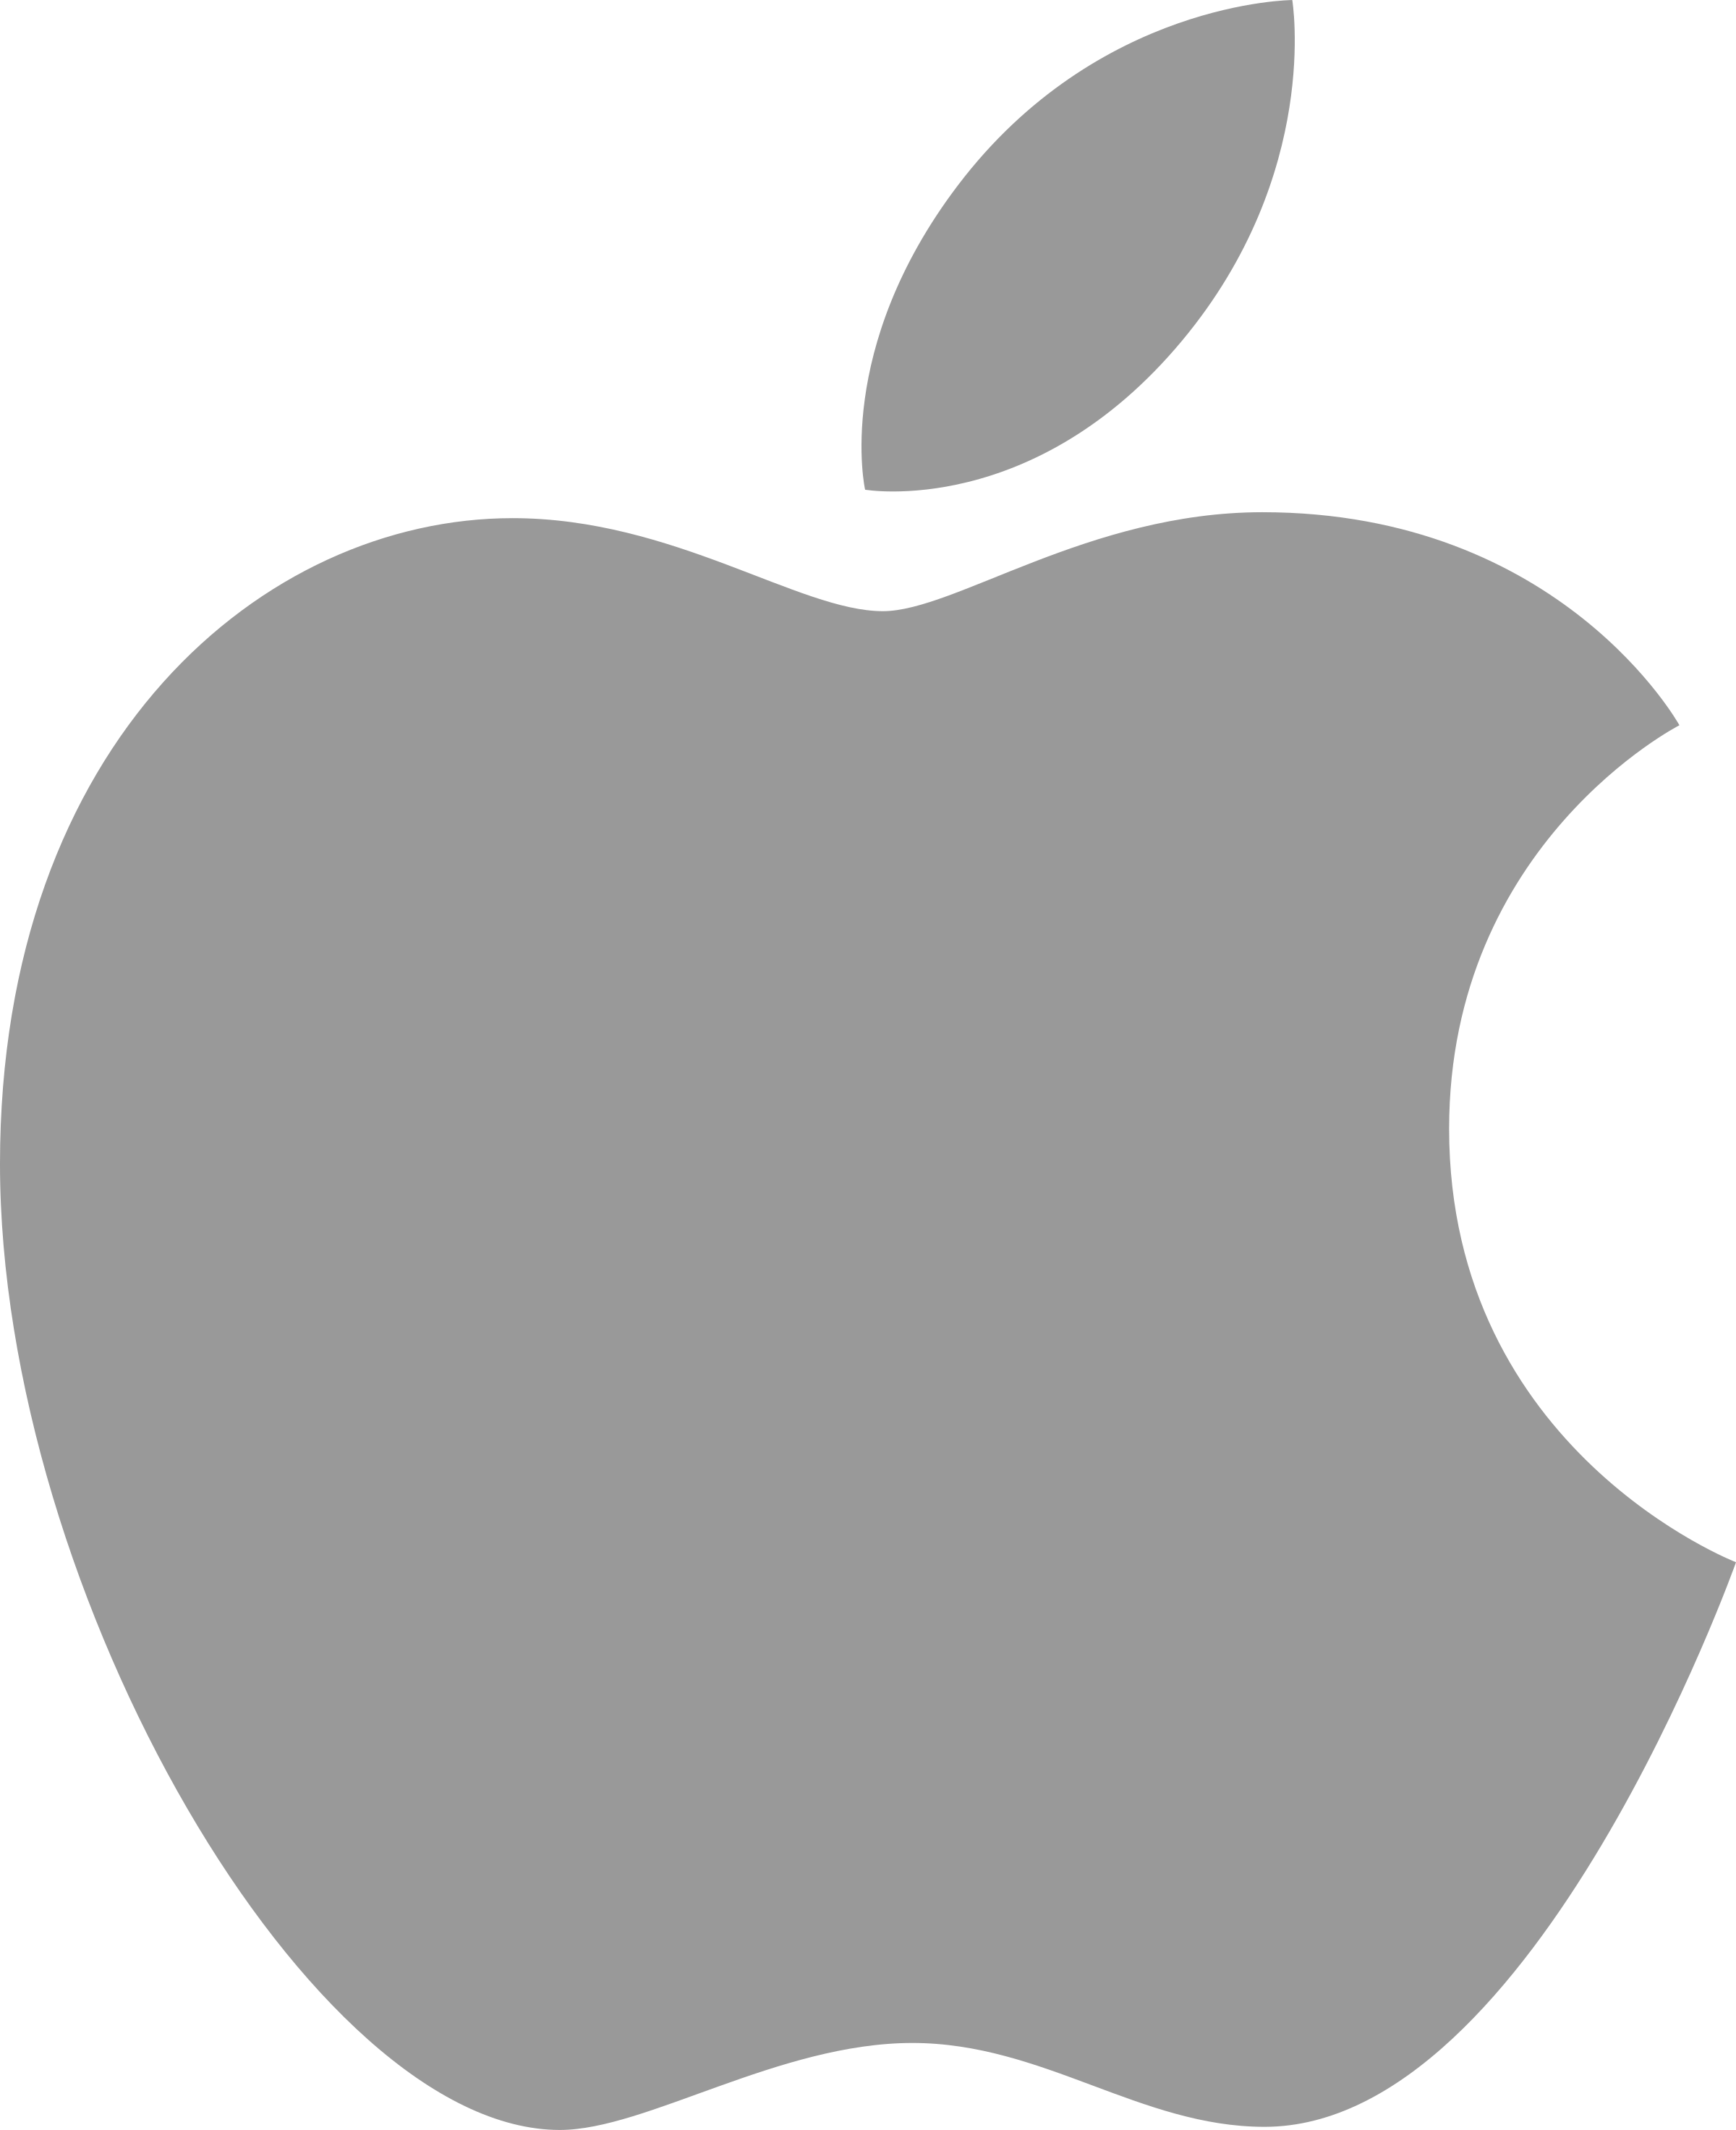 White Transparent Apple Logo - Apple Logo PNG Transparent & SVG Vector - Freebie Supply